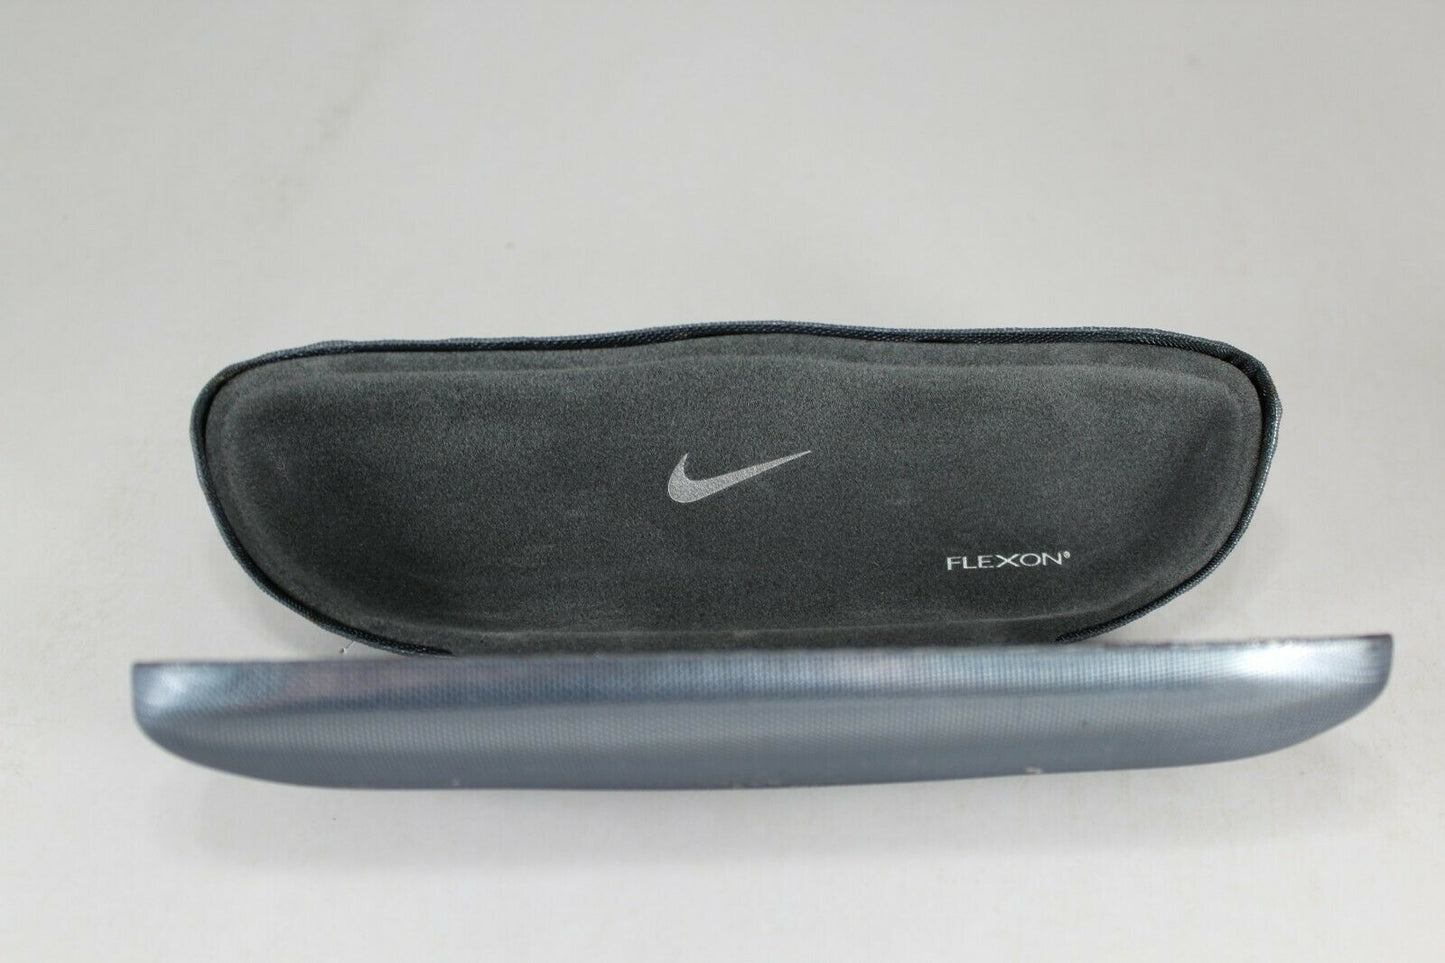 Nike NIKE 8213-001 55mm New Eyeglasses